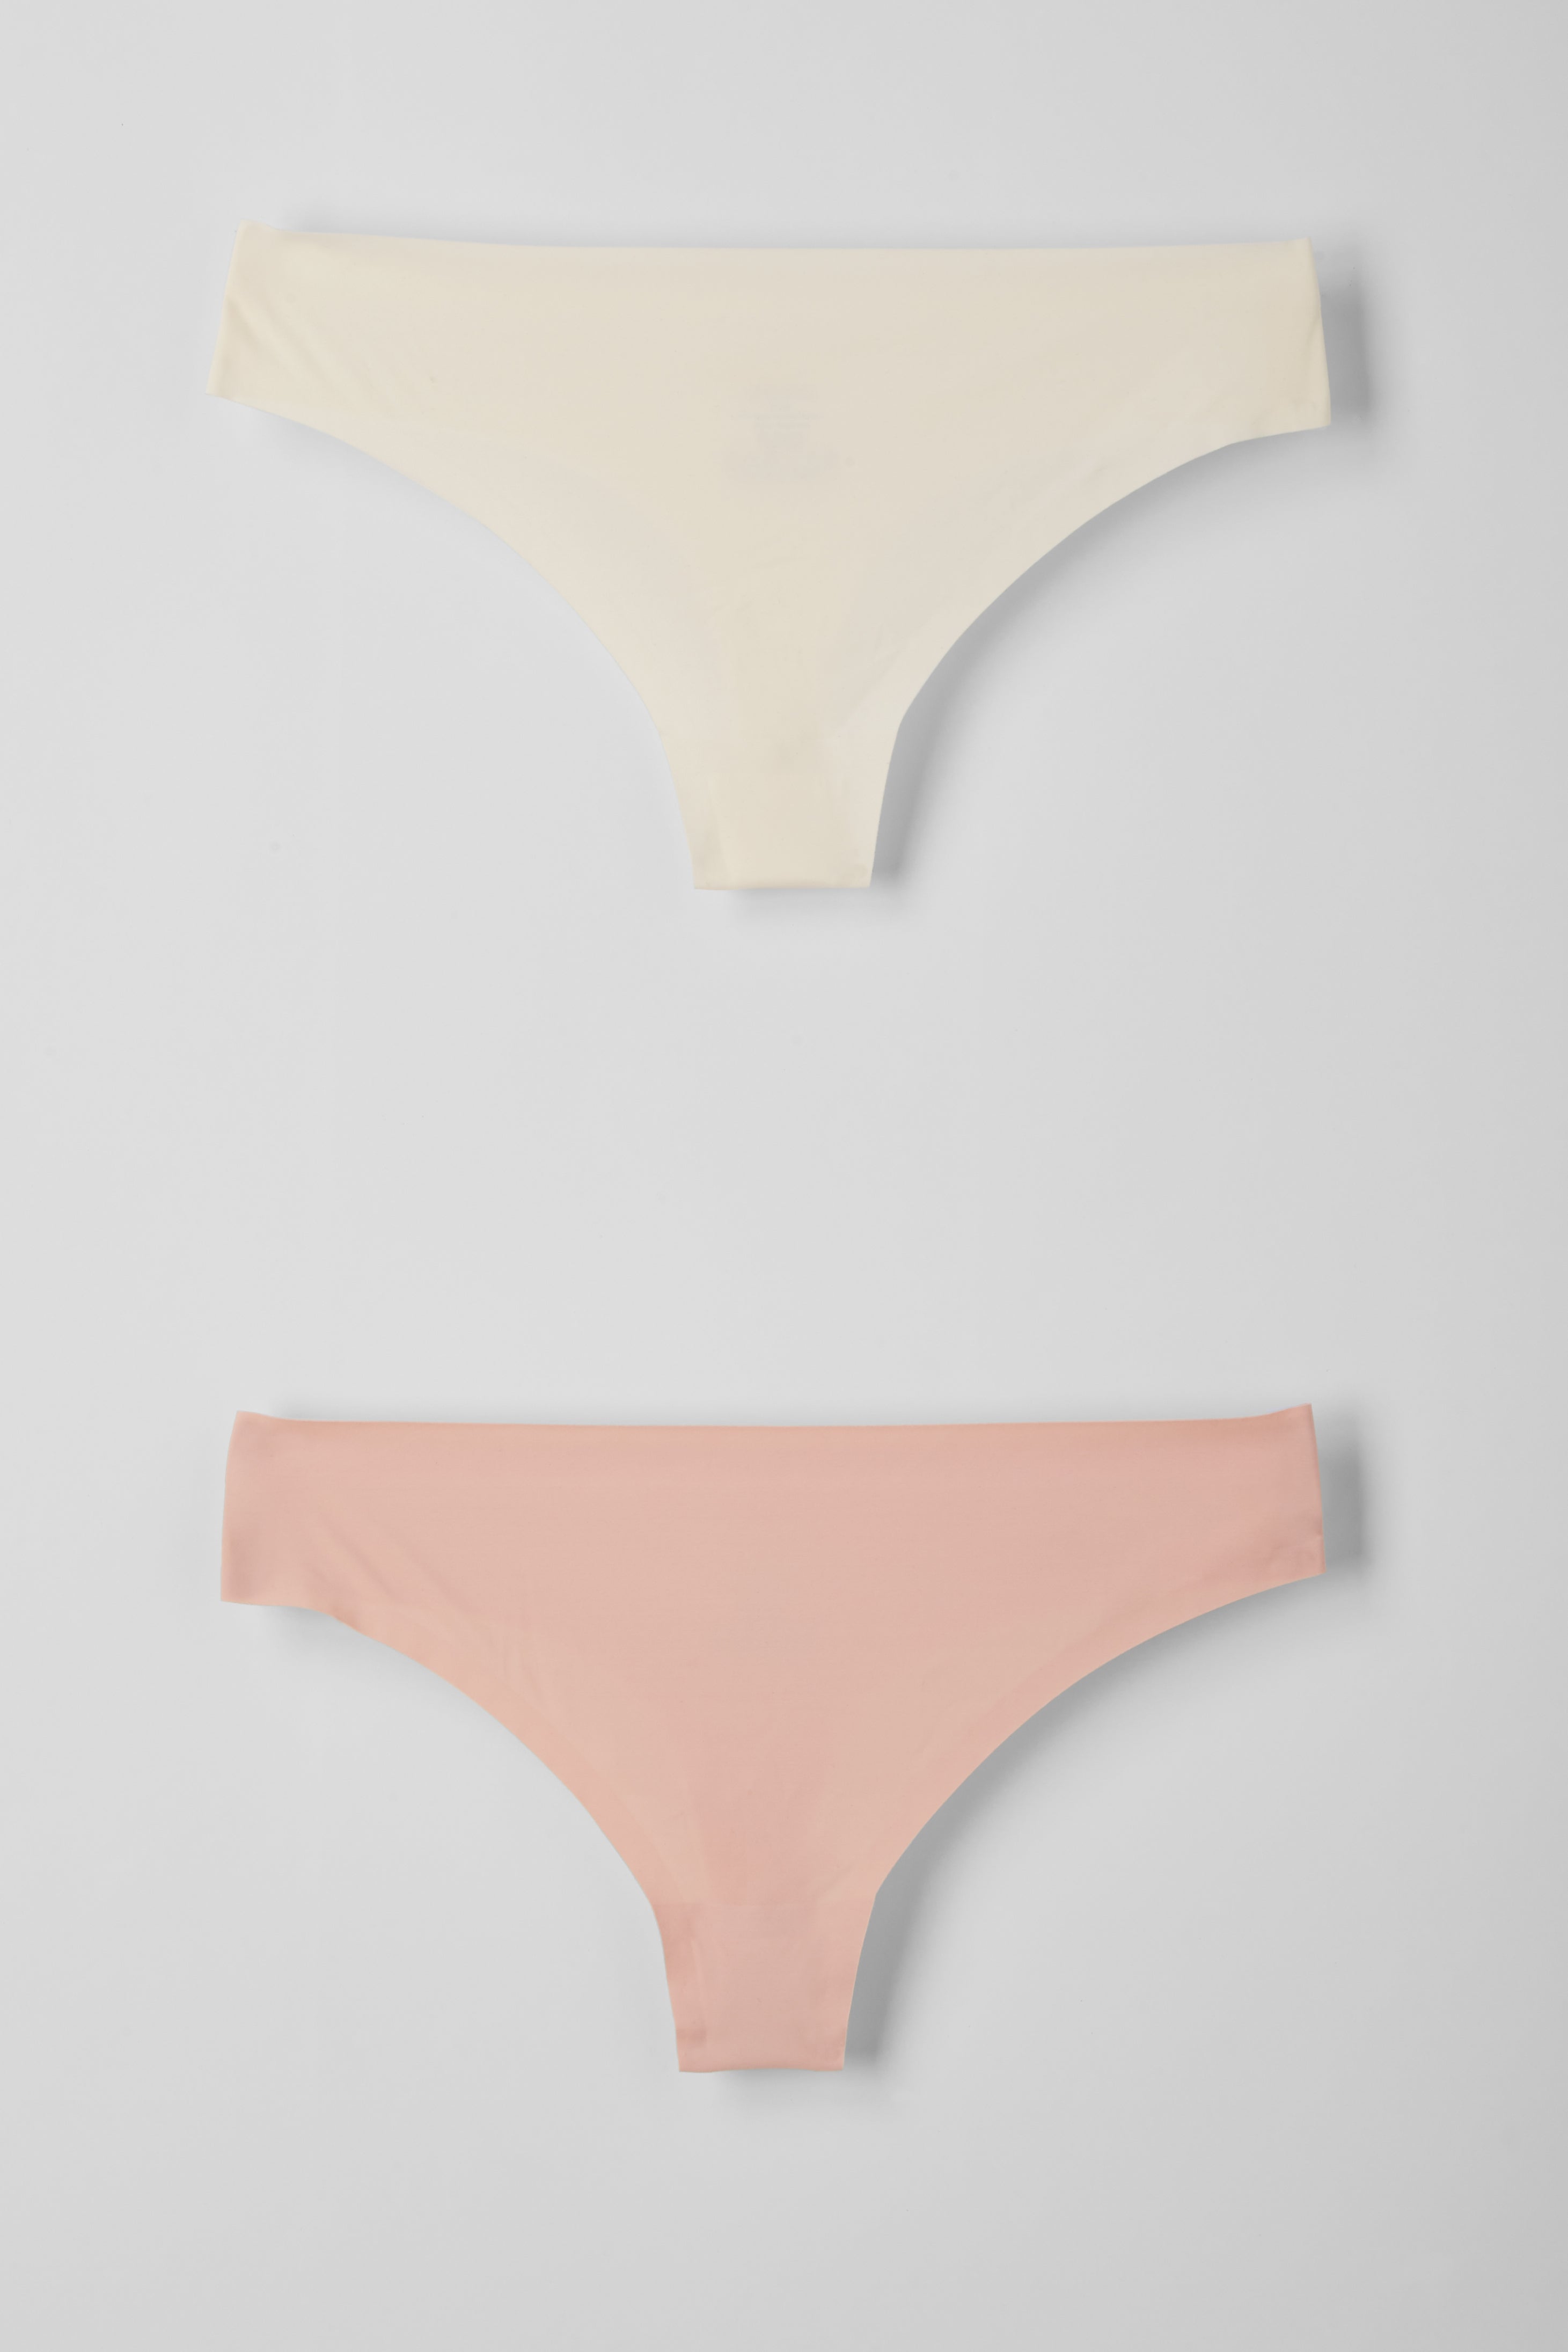 Women's Camouflage cotton G-string, panties, thong, bikini, underwear -  Brand Ne on eBid Canada